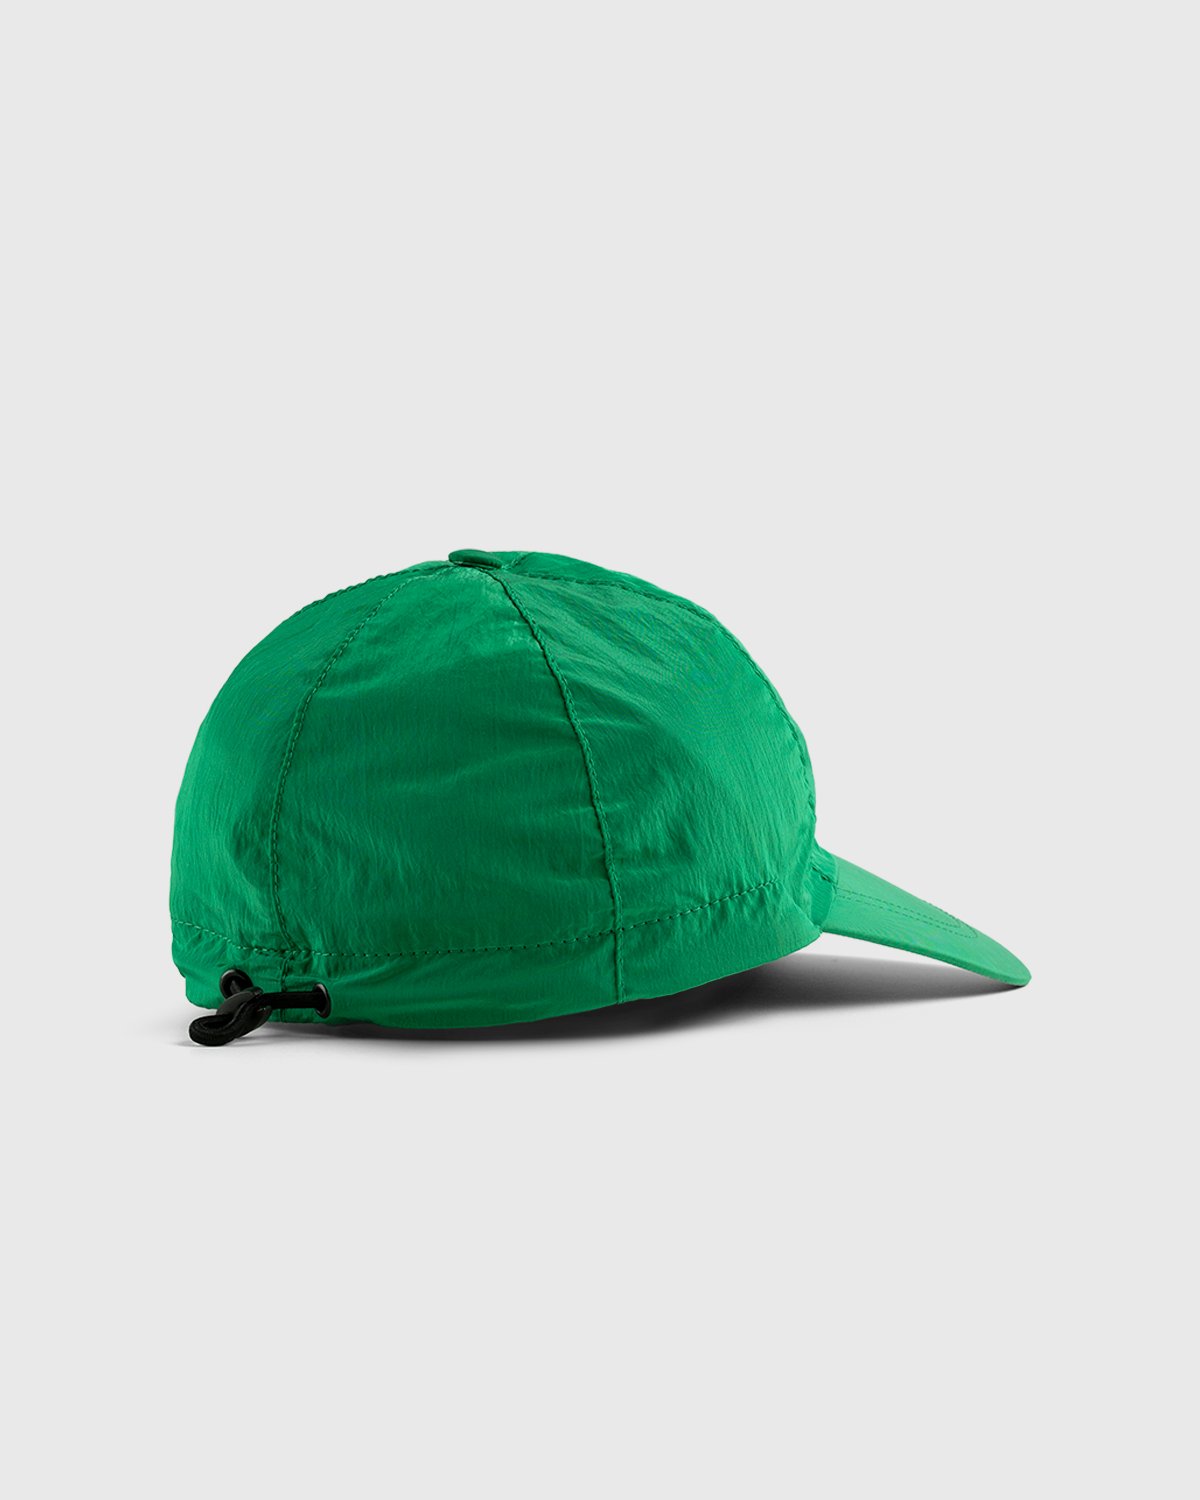 Stone Island - Six Panel Hat Green - Accessories - Green - Image 2